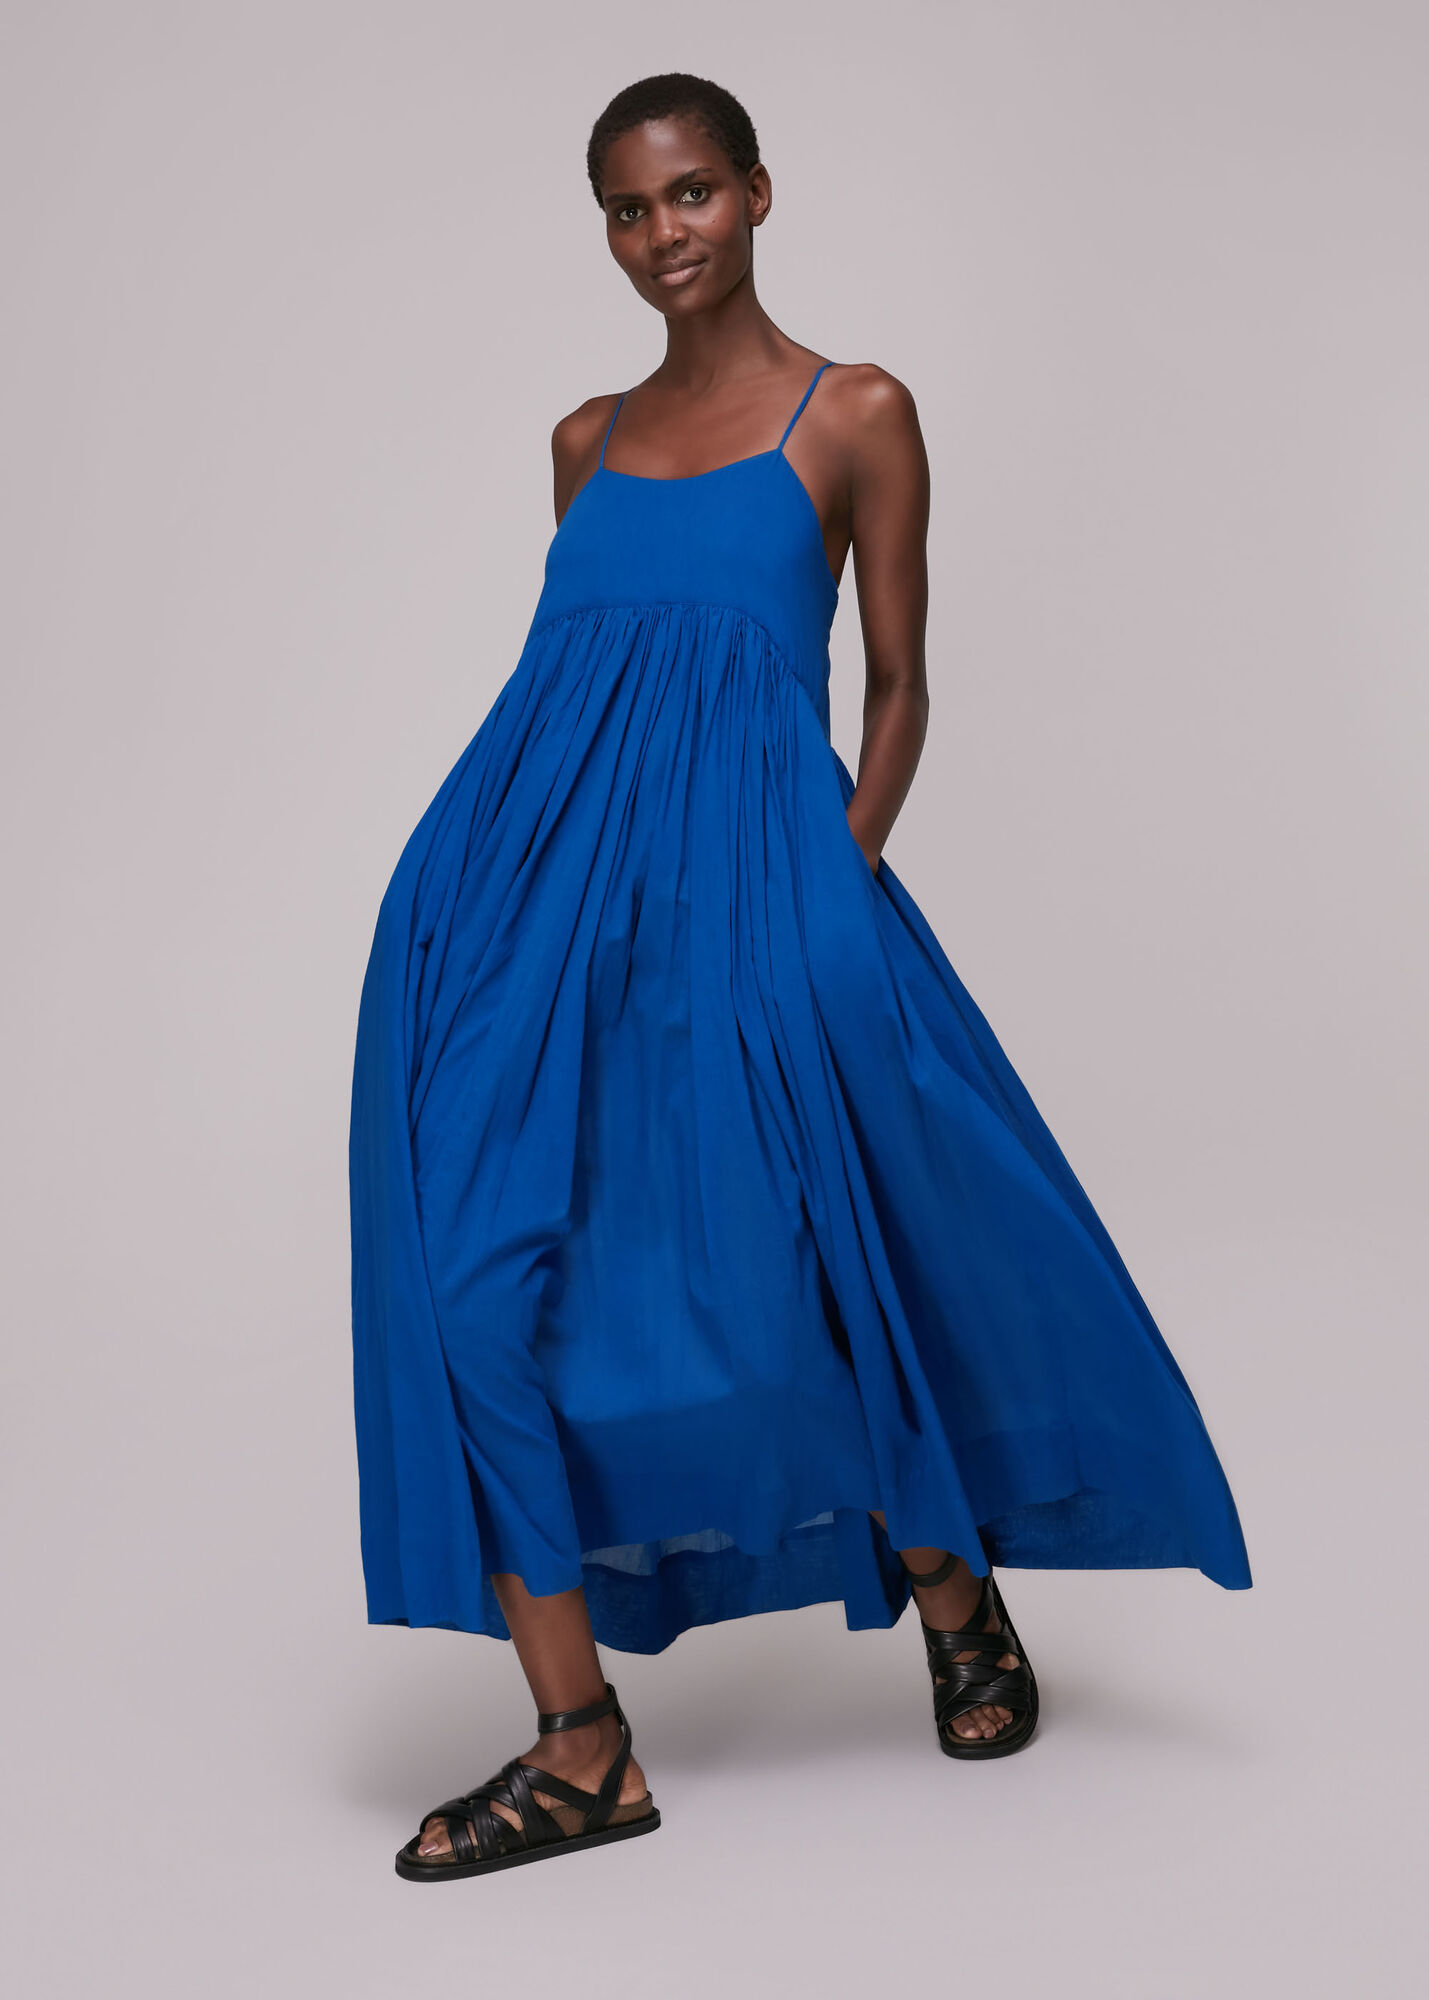 Blue Carmen Trapeze Dress | WHISTLES